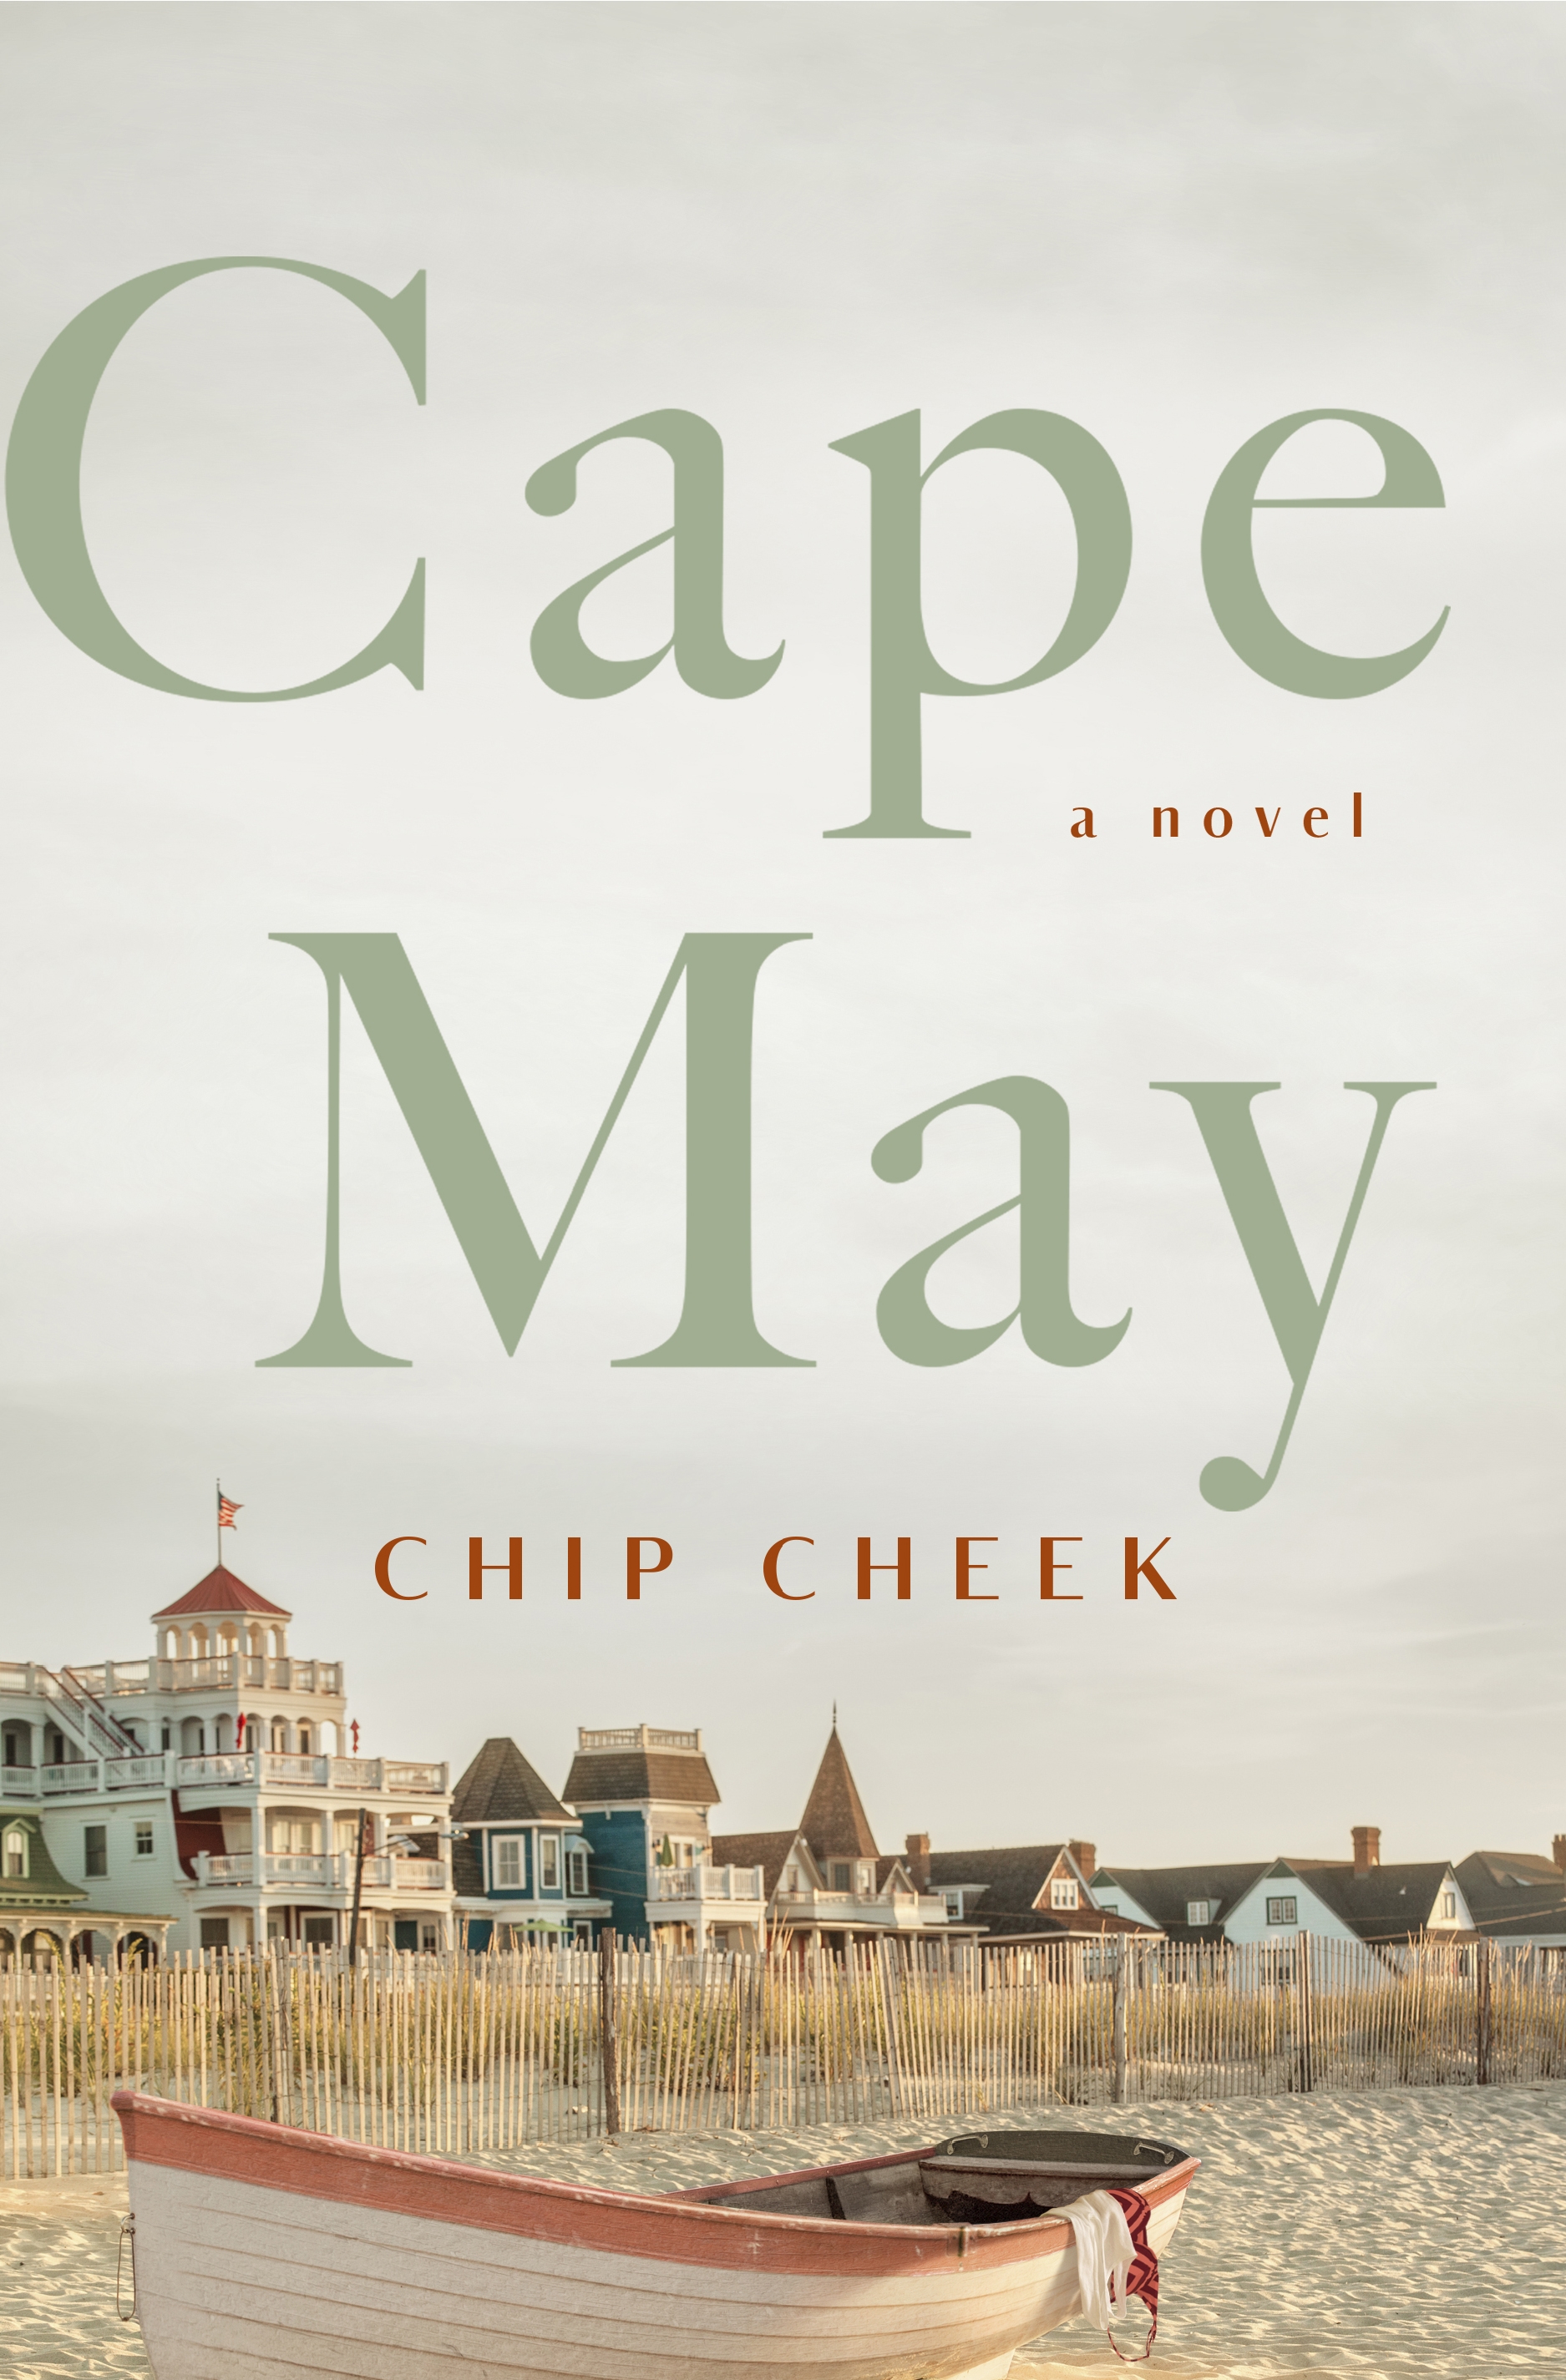 Cape May - Celadon Books